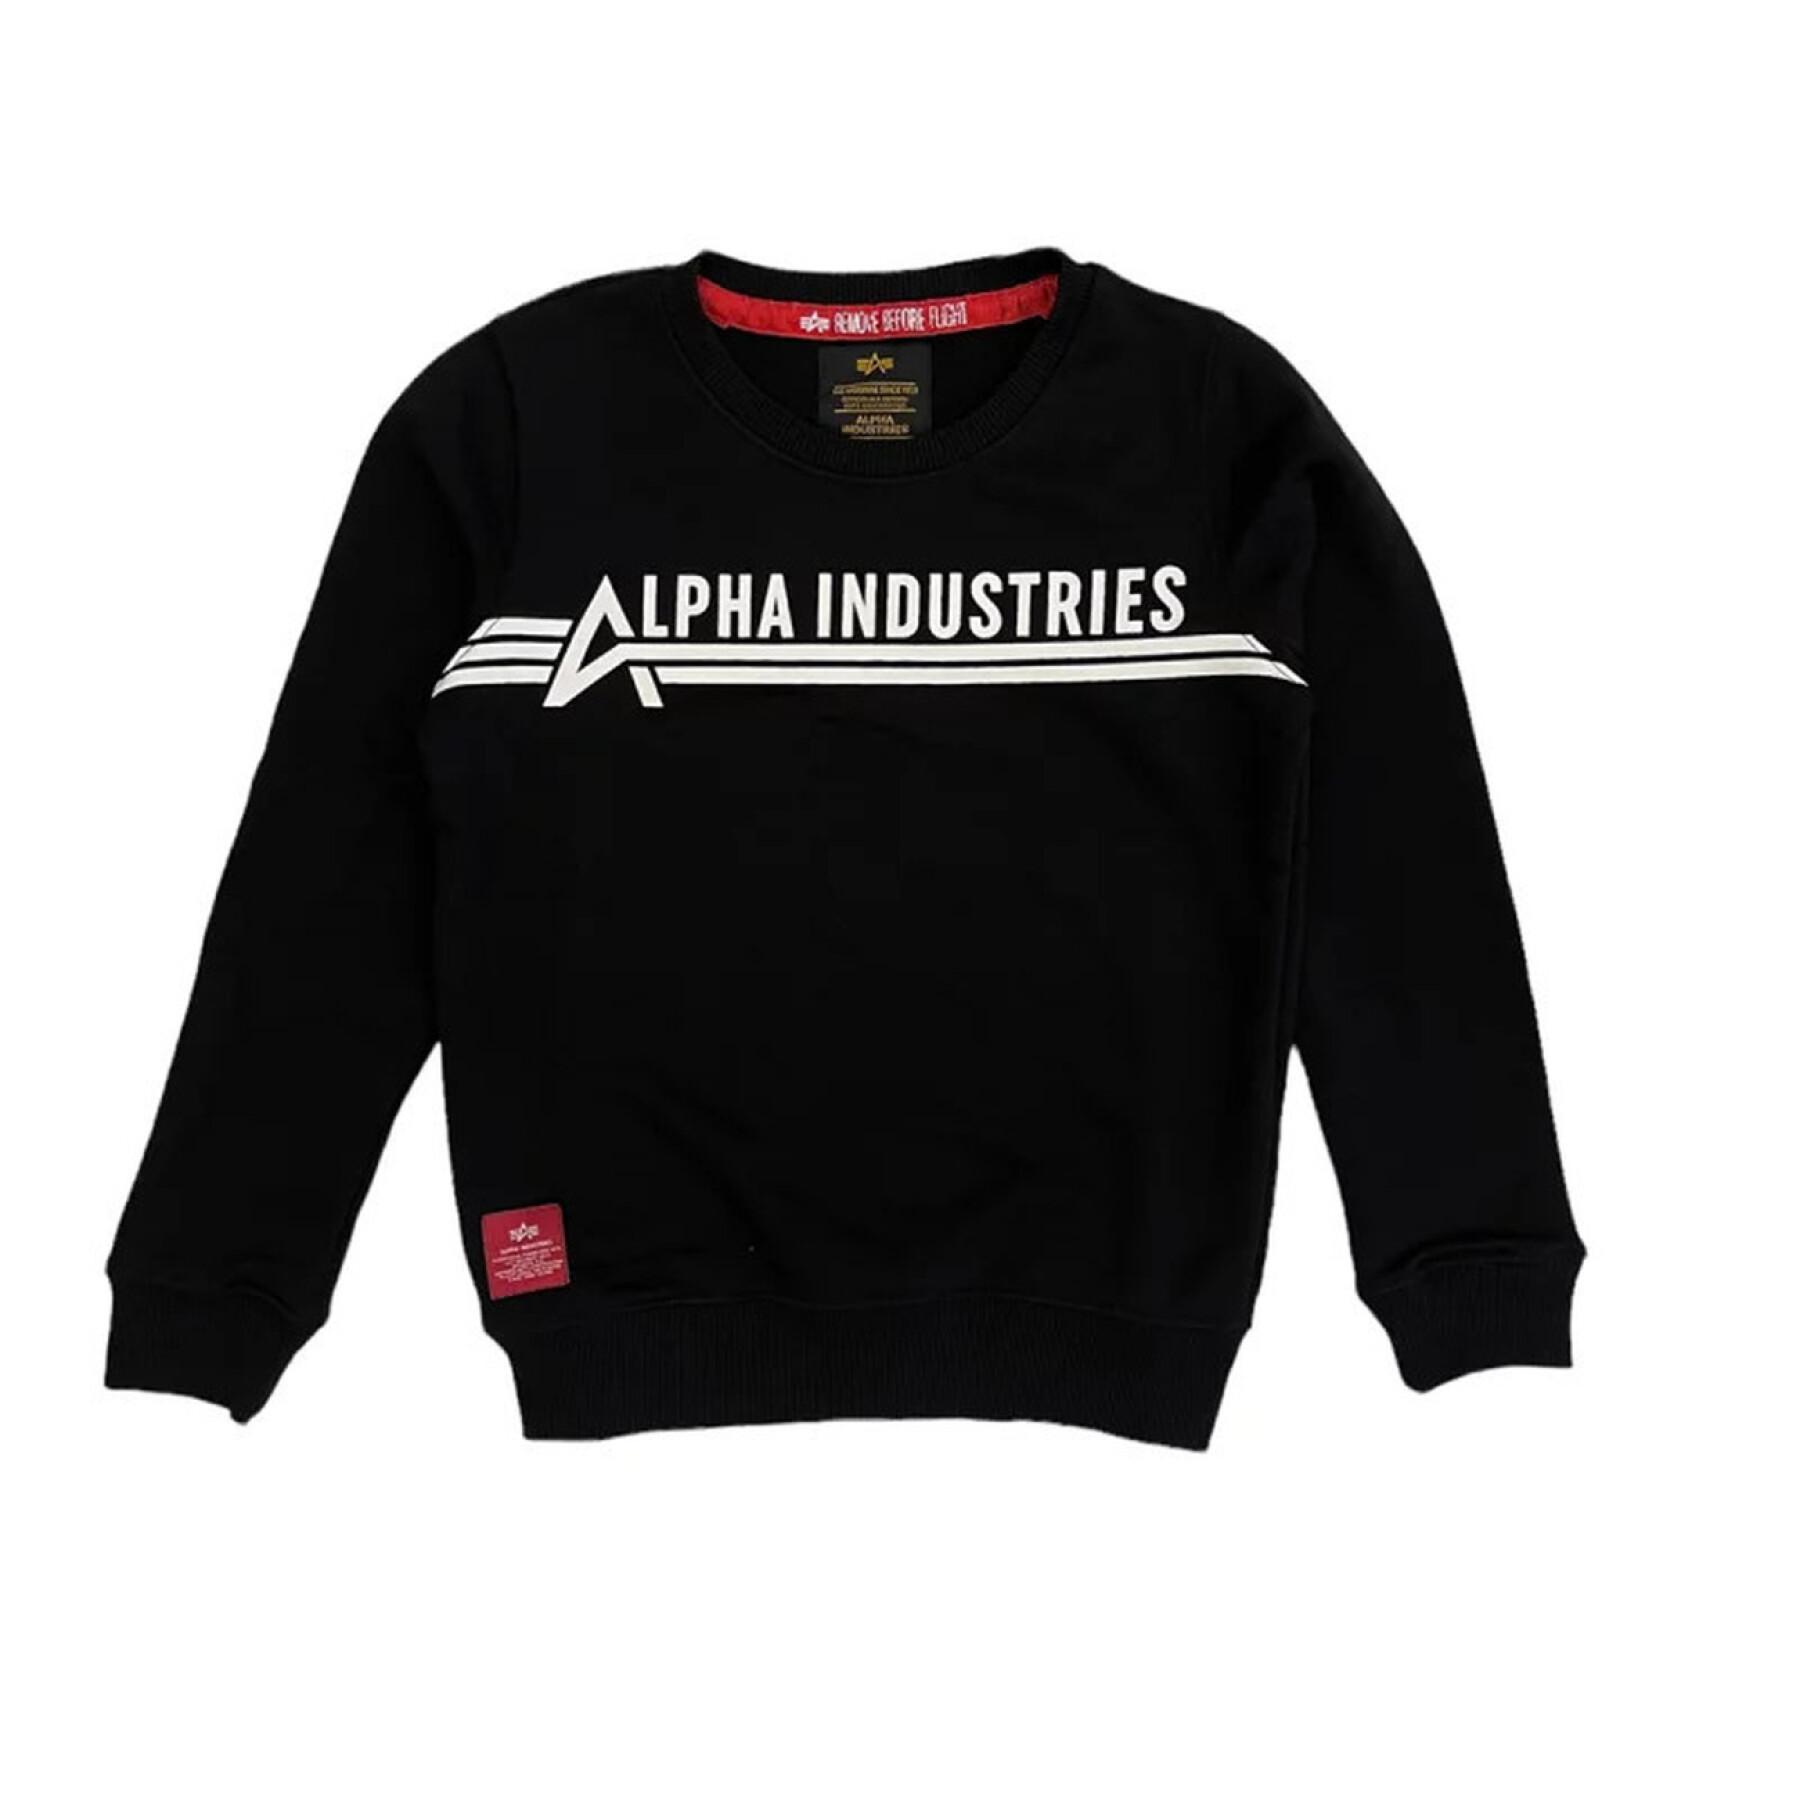 Kinder sweatshirt Alpha Industries